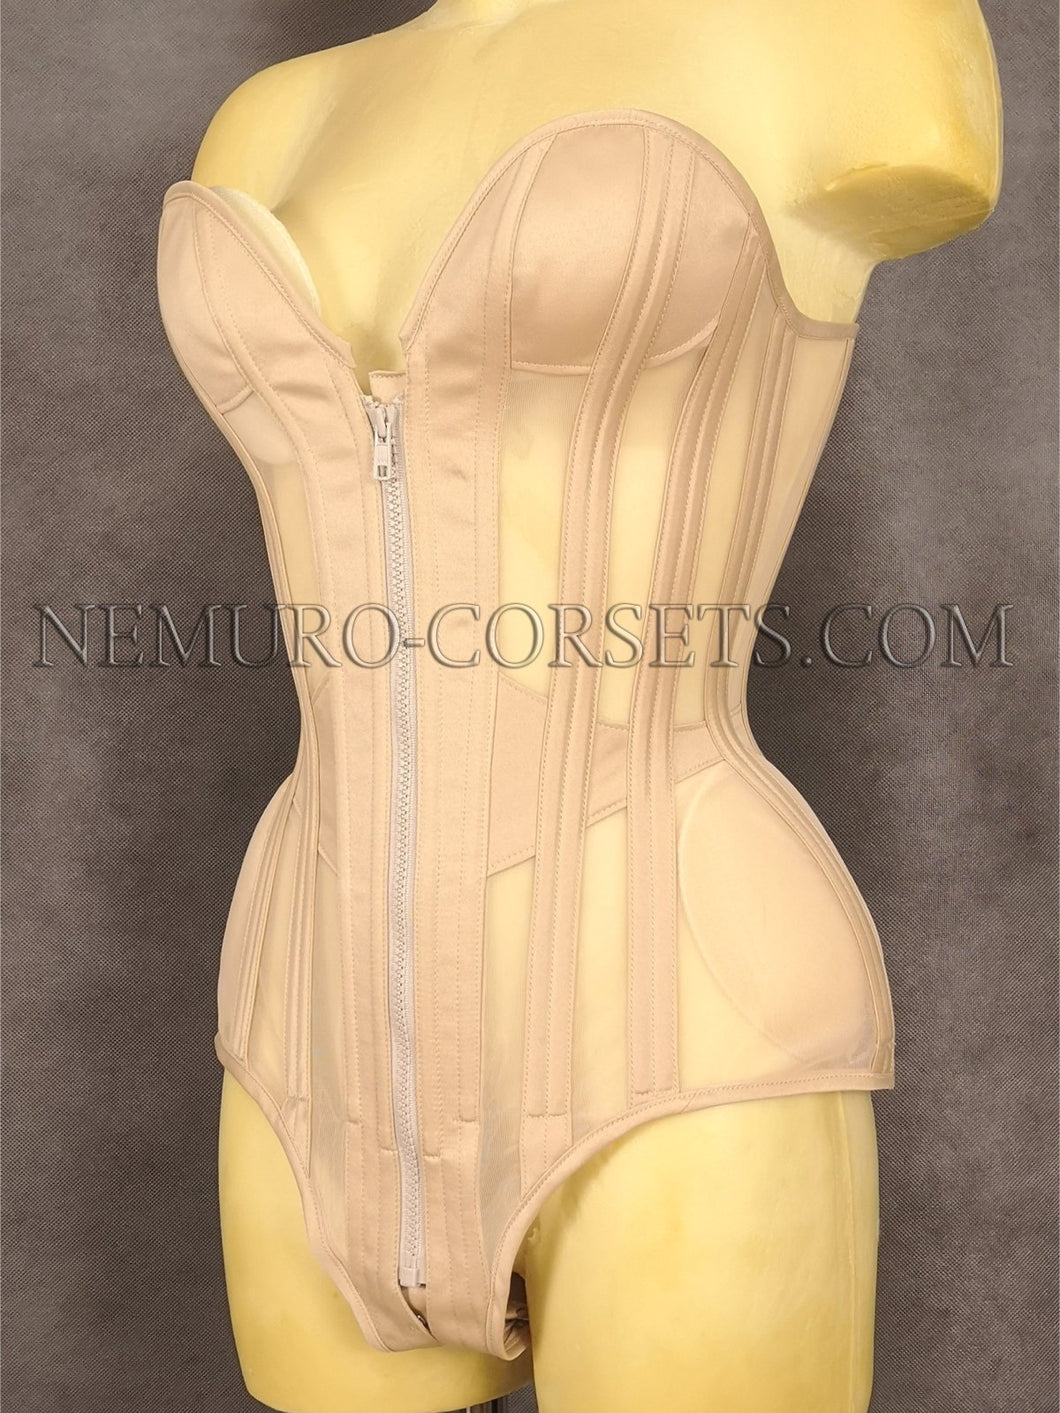 Classic bust Mesh Bodysuit corset